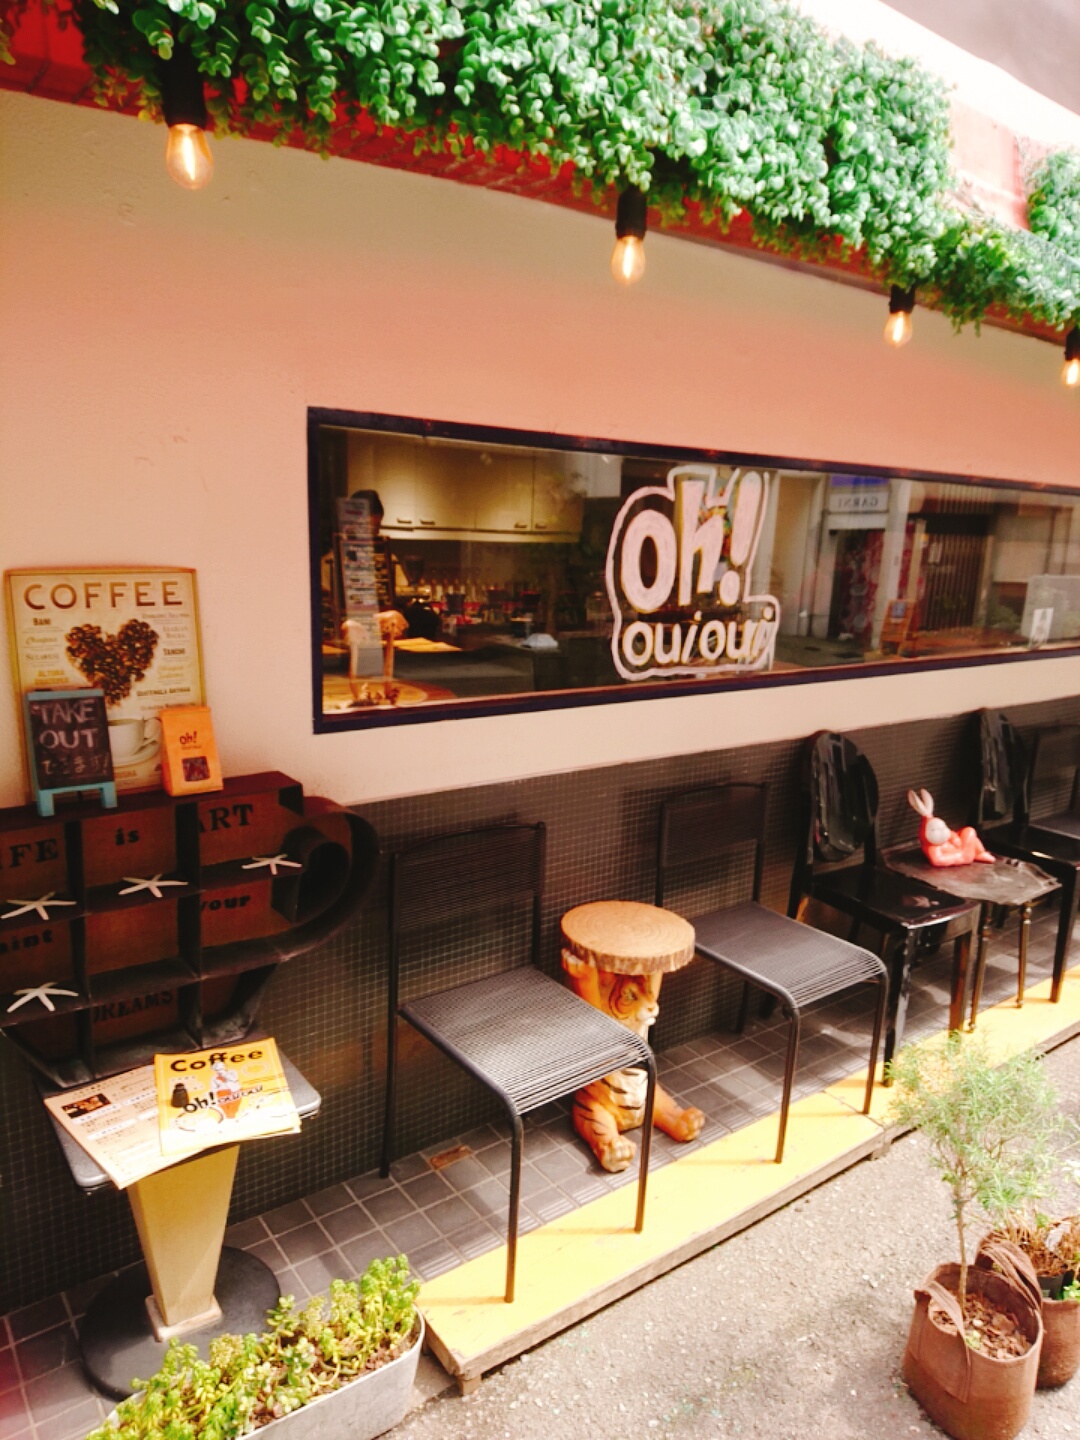 【Oh! oui oui coffee】TVでも紹介されたスペシャルコーヒーのお店